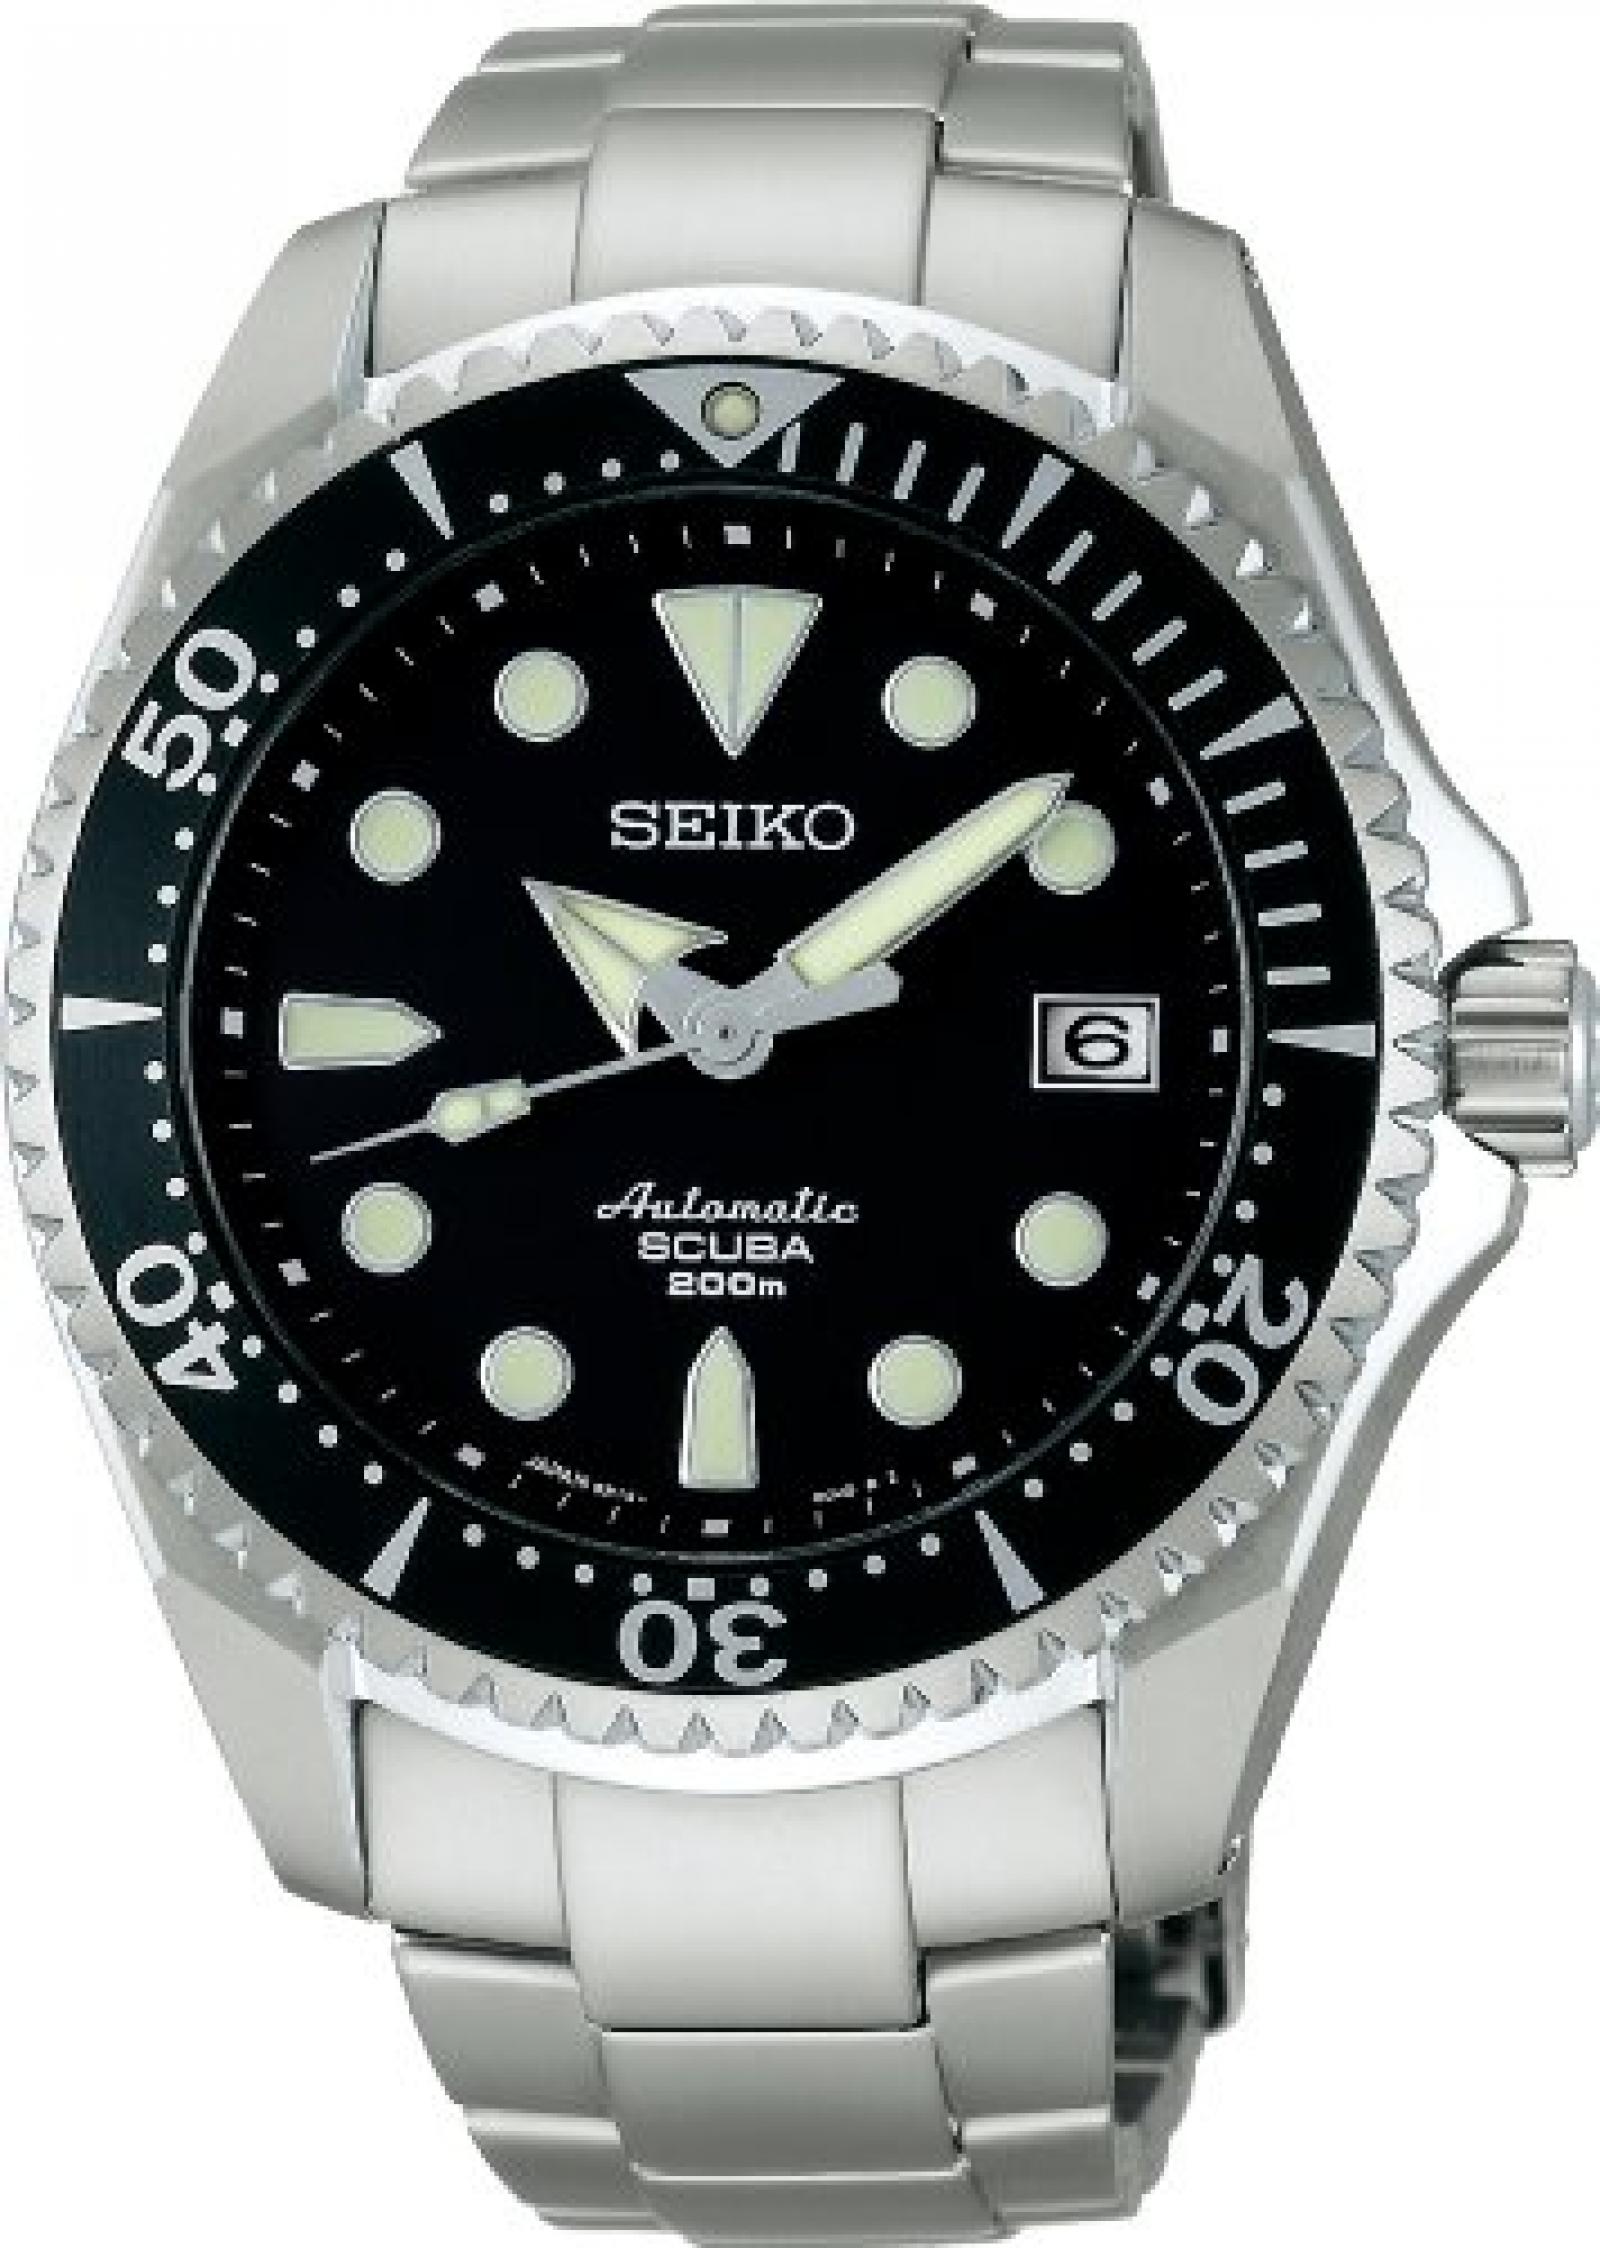 Seiko Prospex Scuba Diver SBDC007 Mens Watch Japan import 